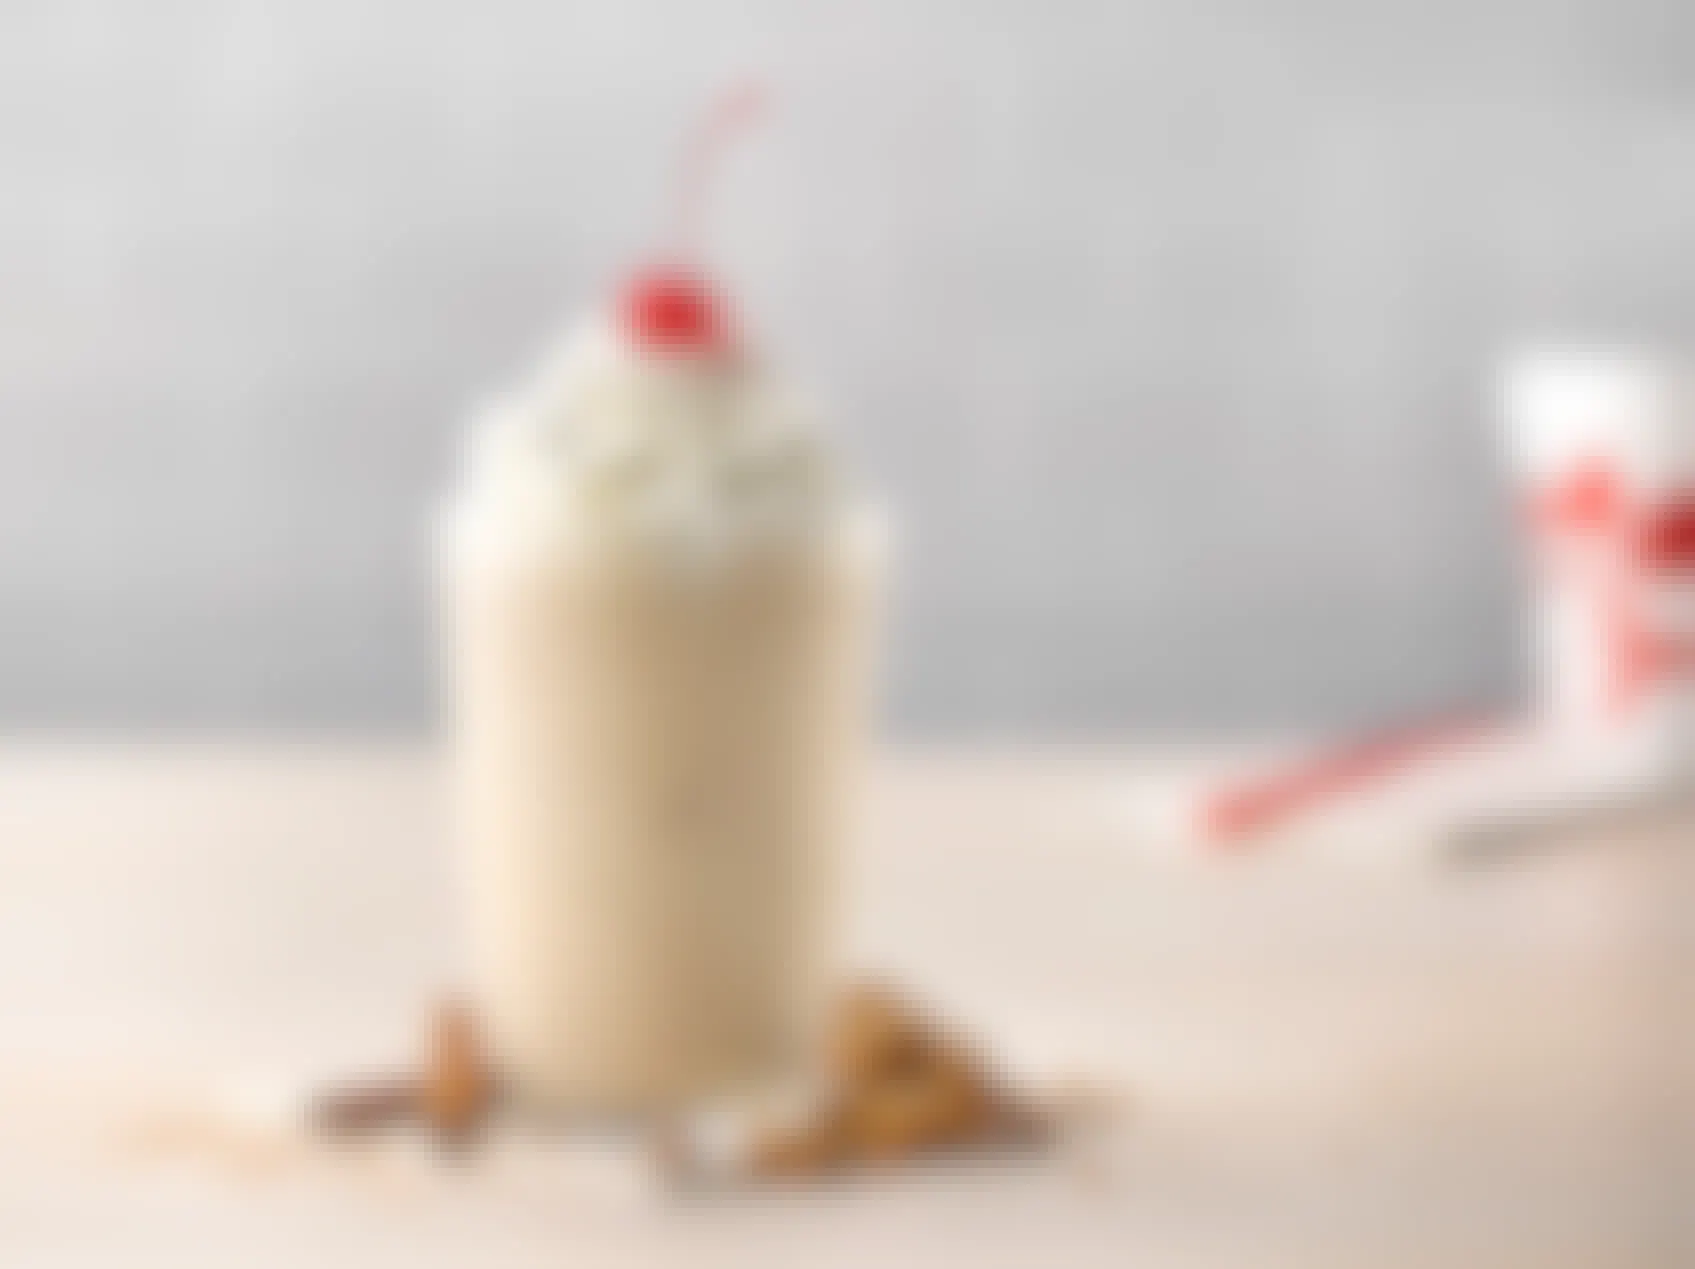 A Chick-fil-A milkshake on a table